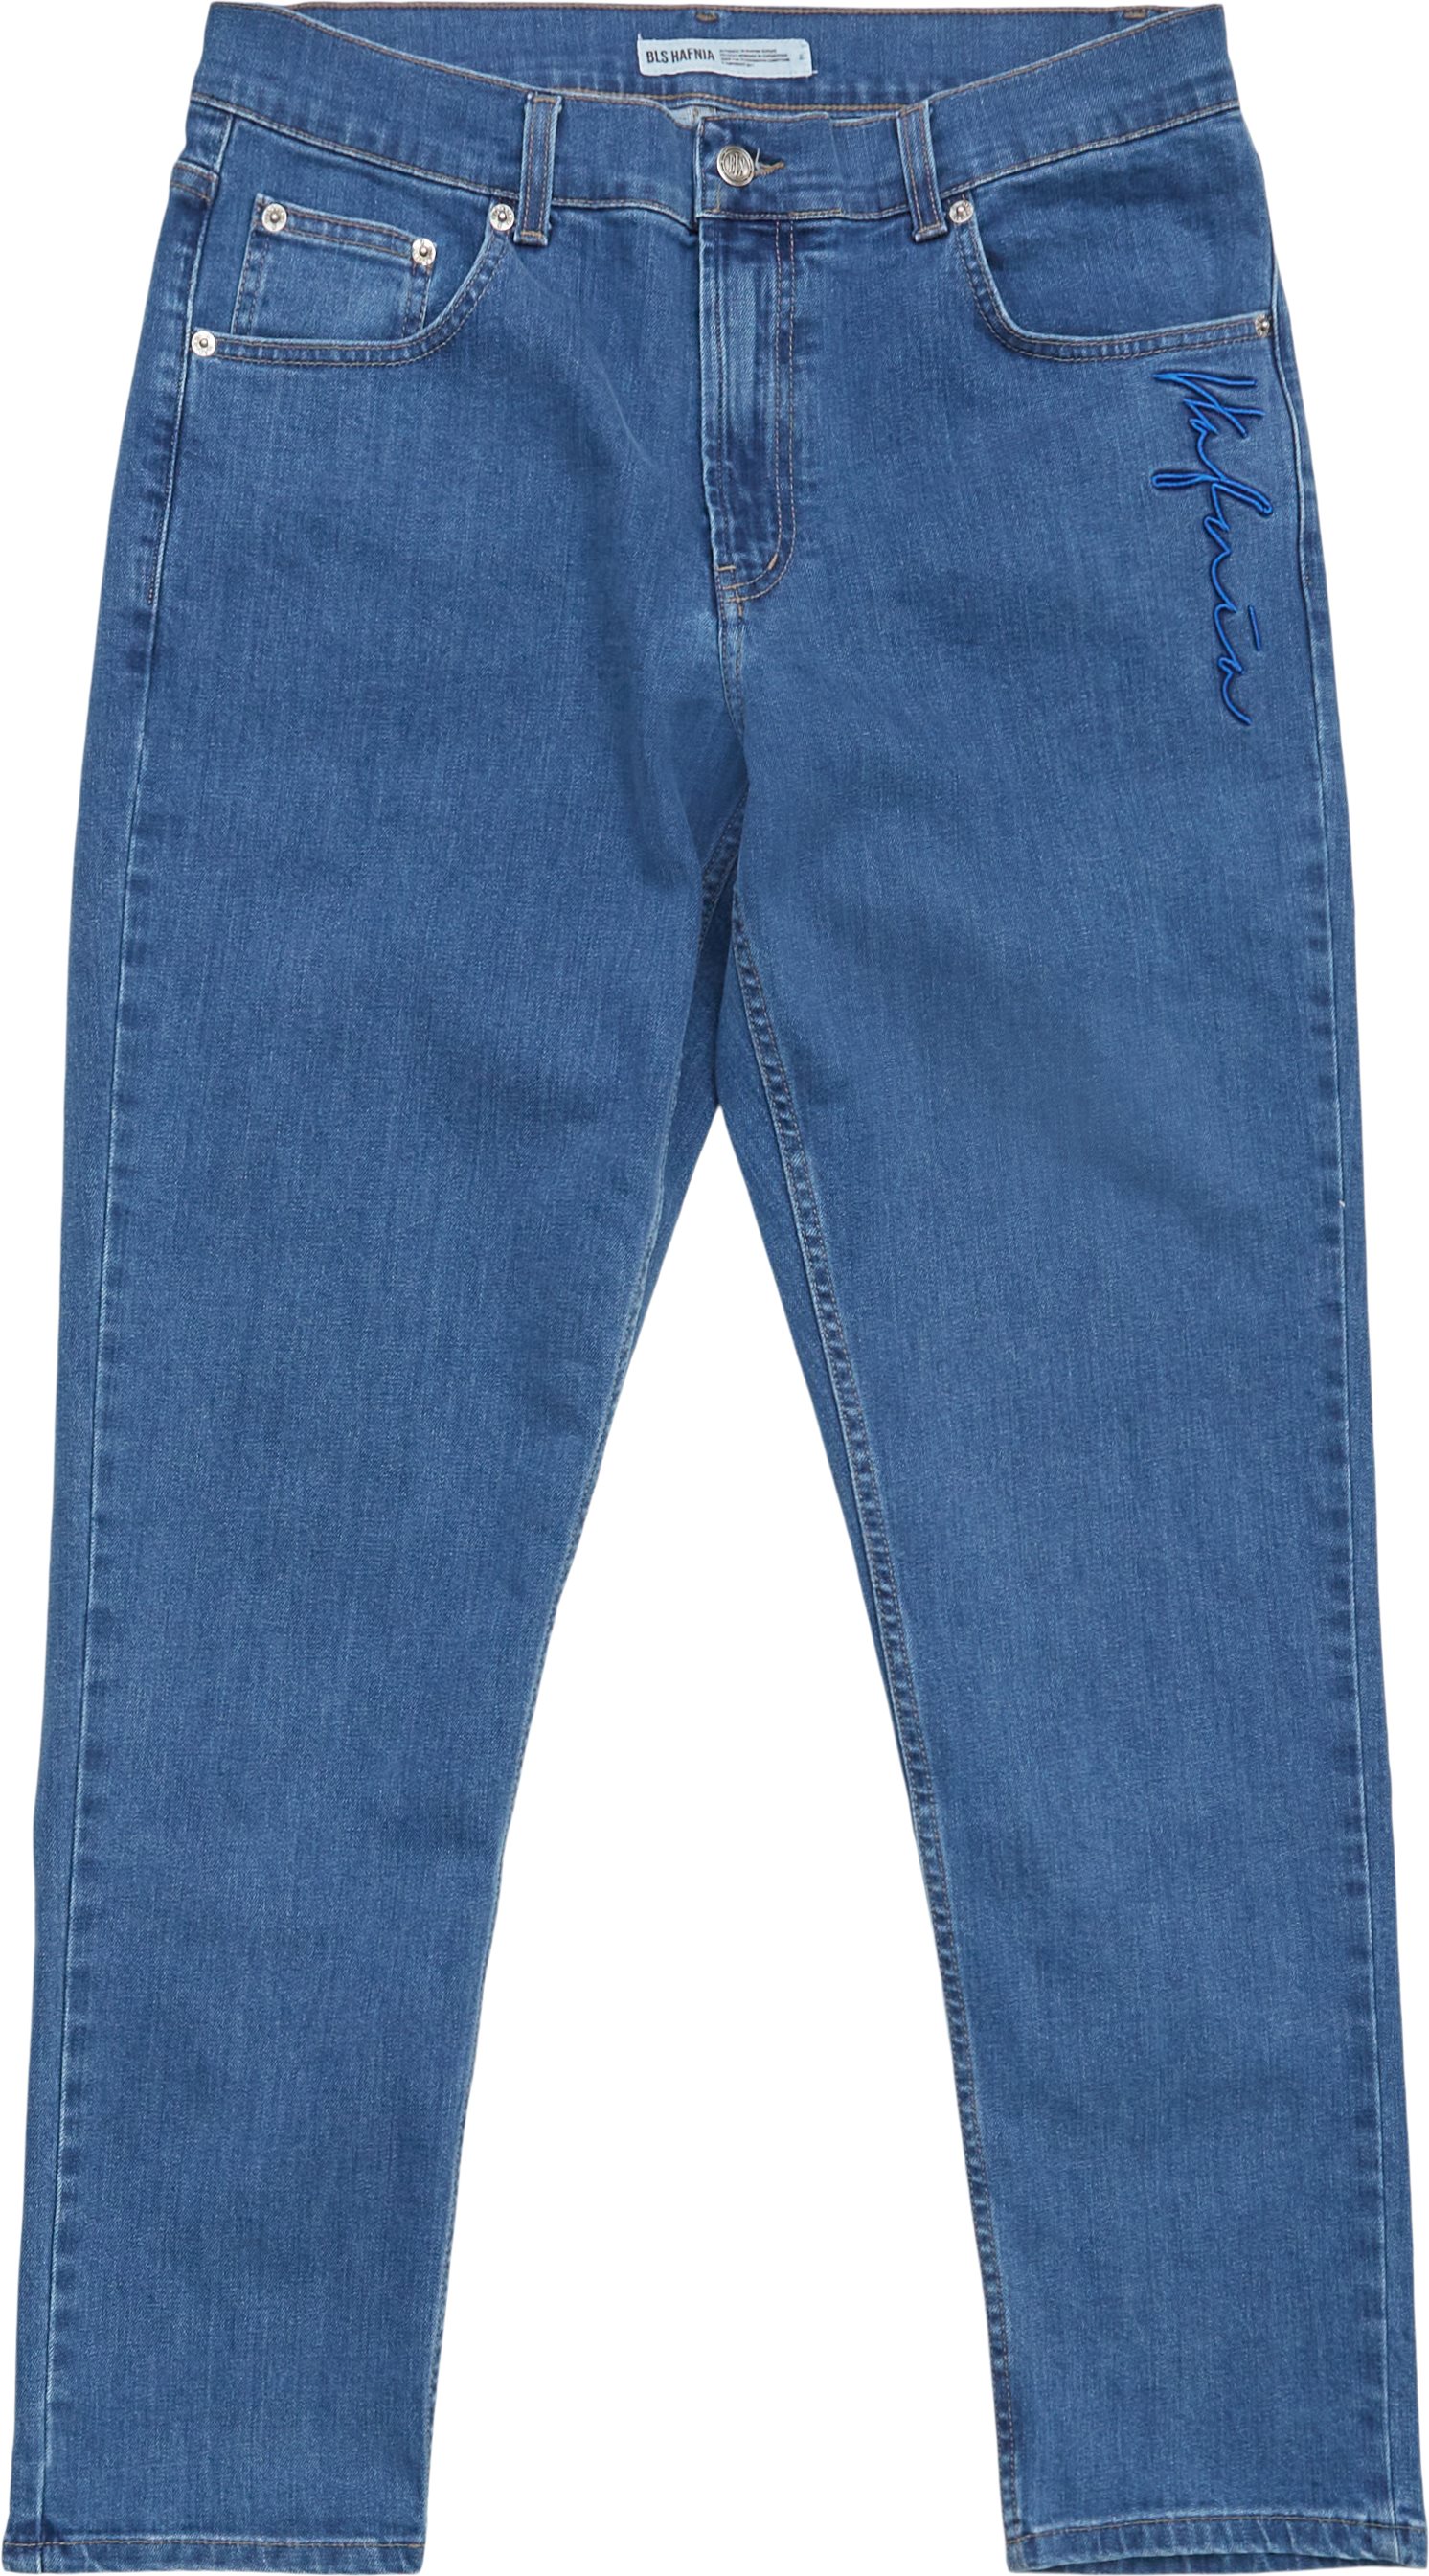 BLS Jeans DAMON JEANS 202208044 Blue